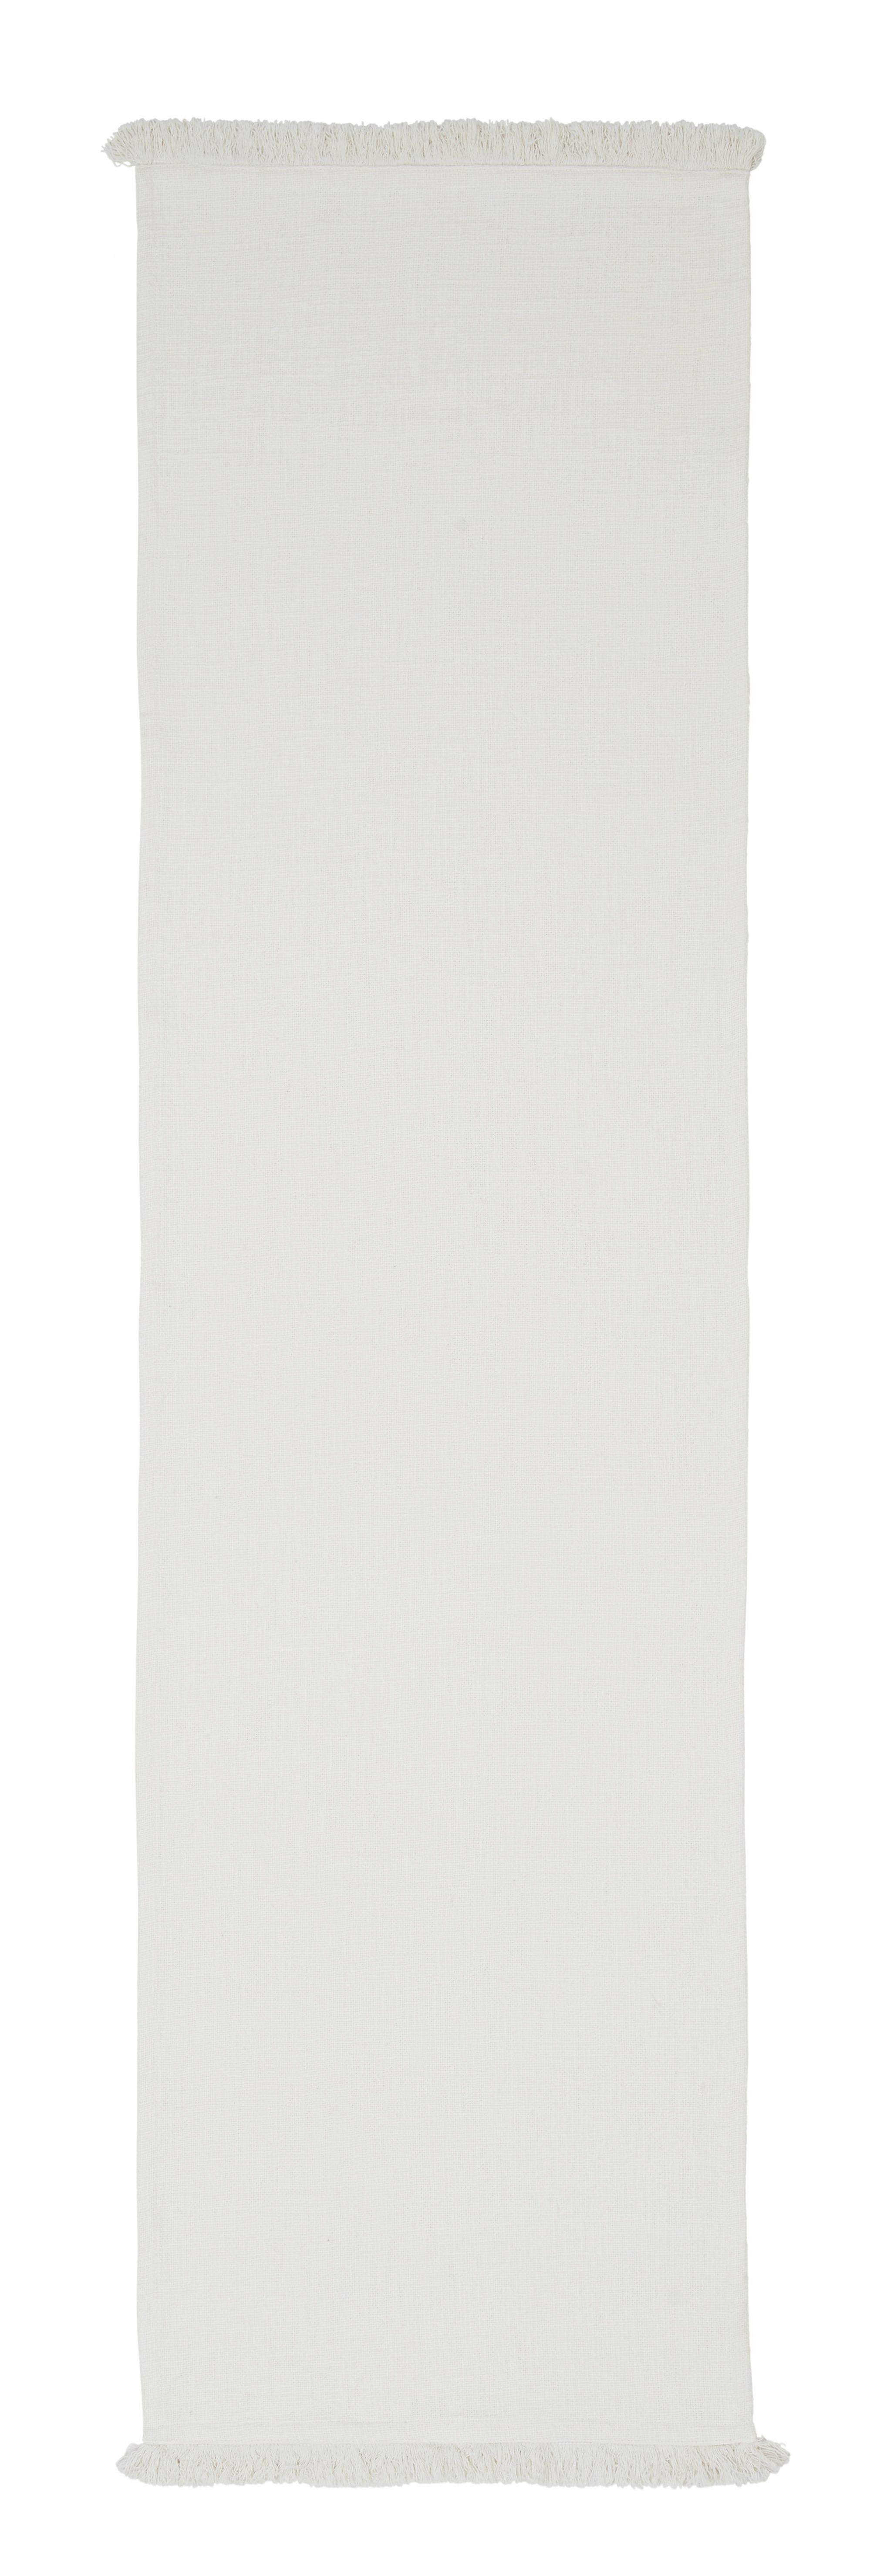 Asztali Futó Pablo - Fehér, modern, Textil (45/170cm) - Premium Living